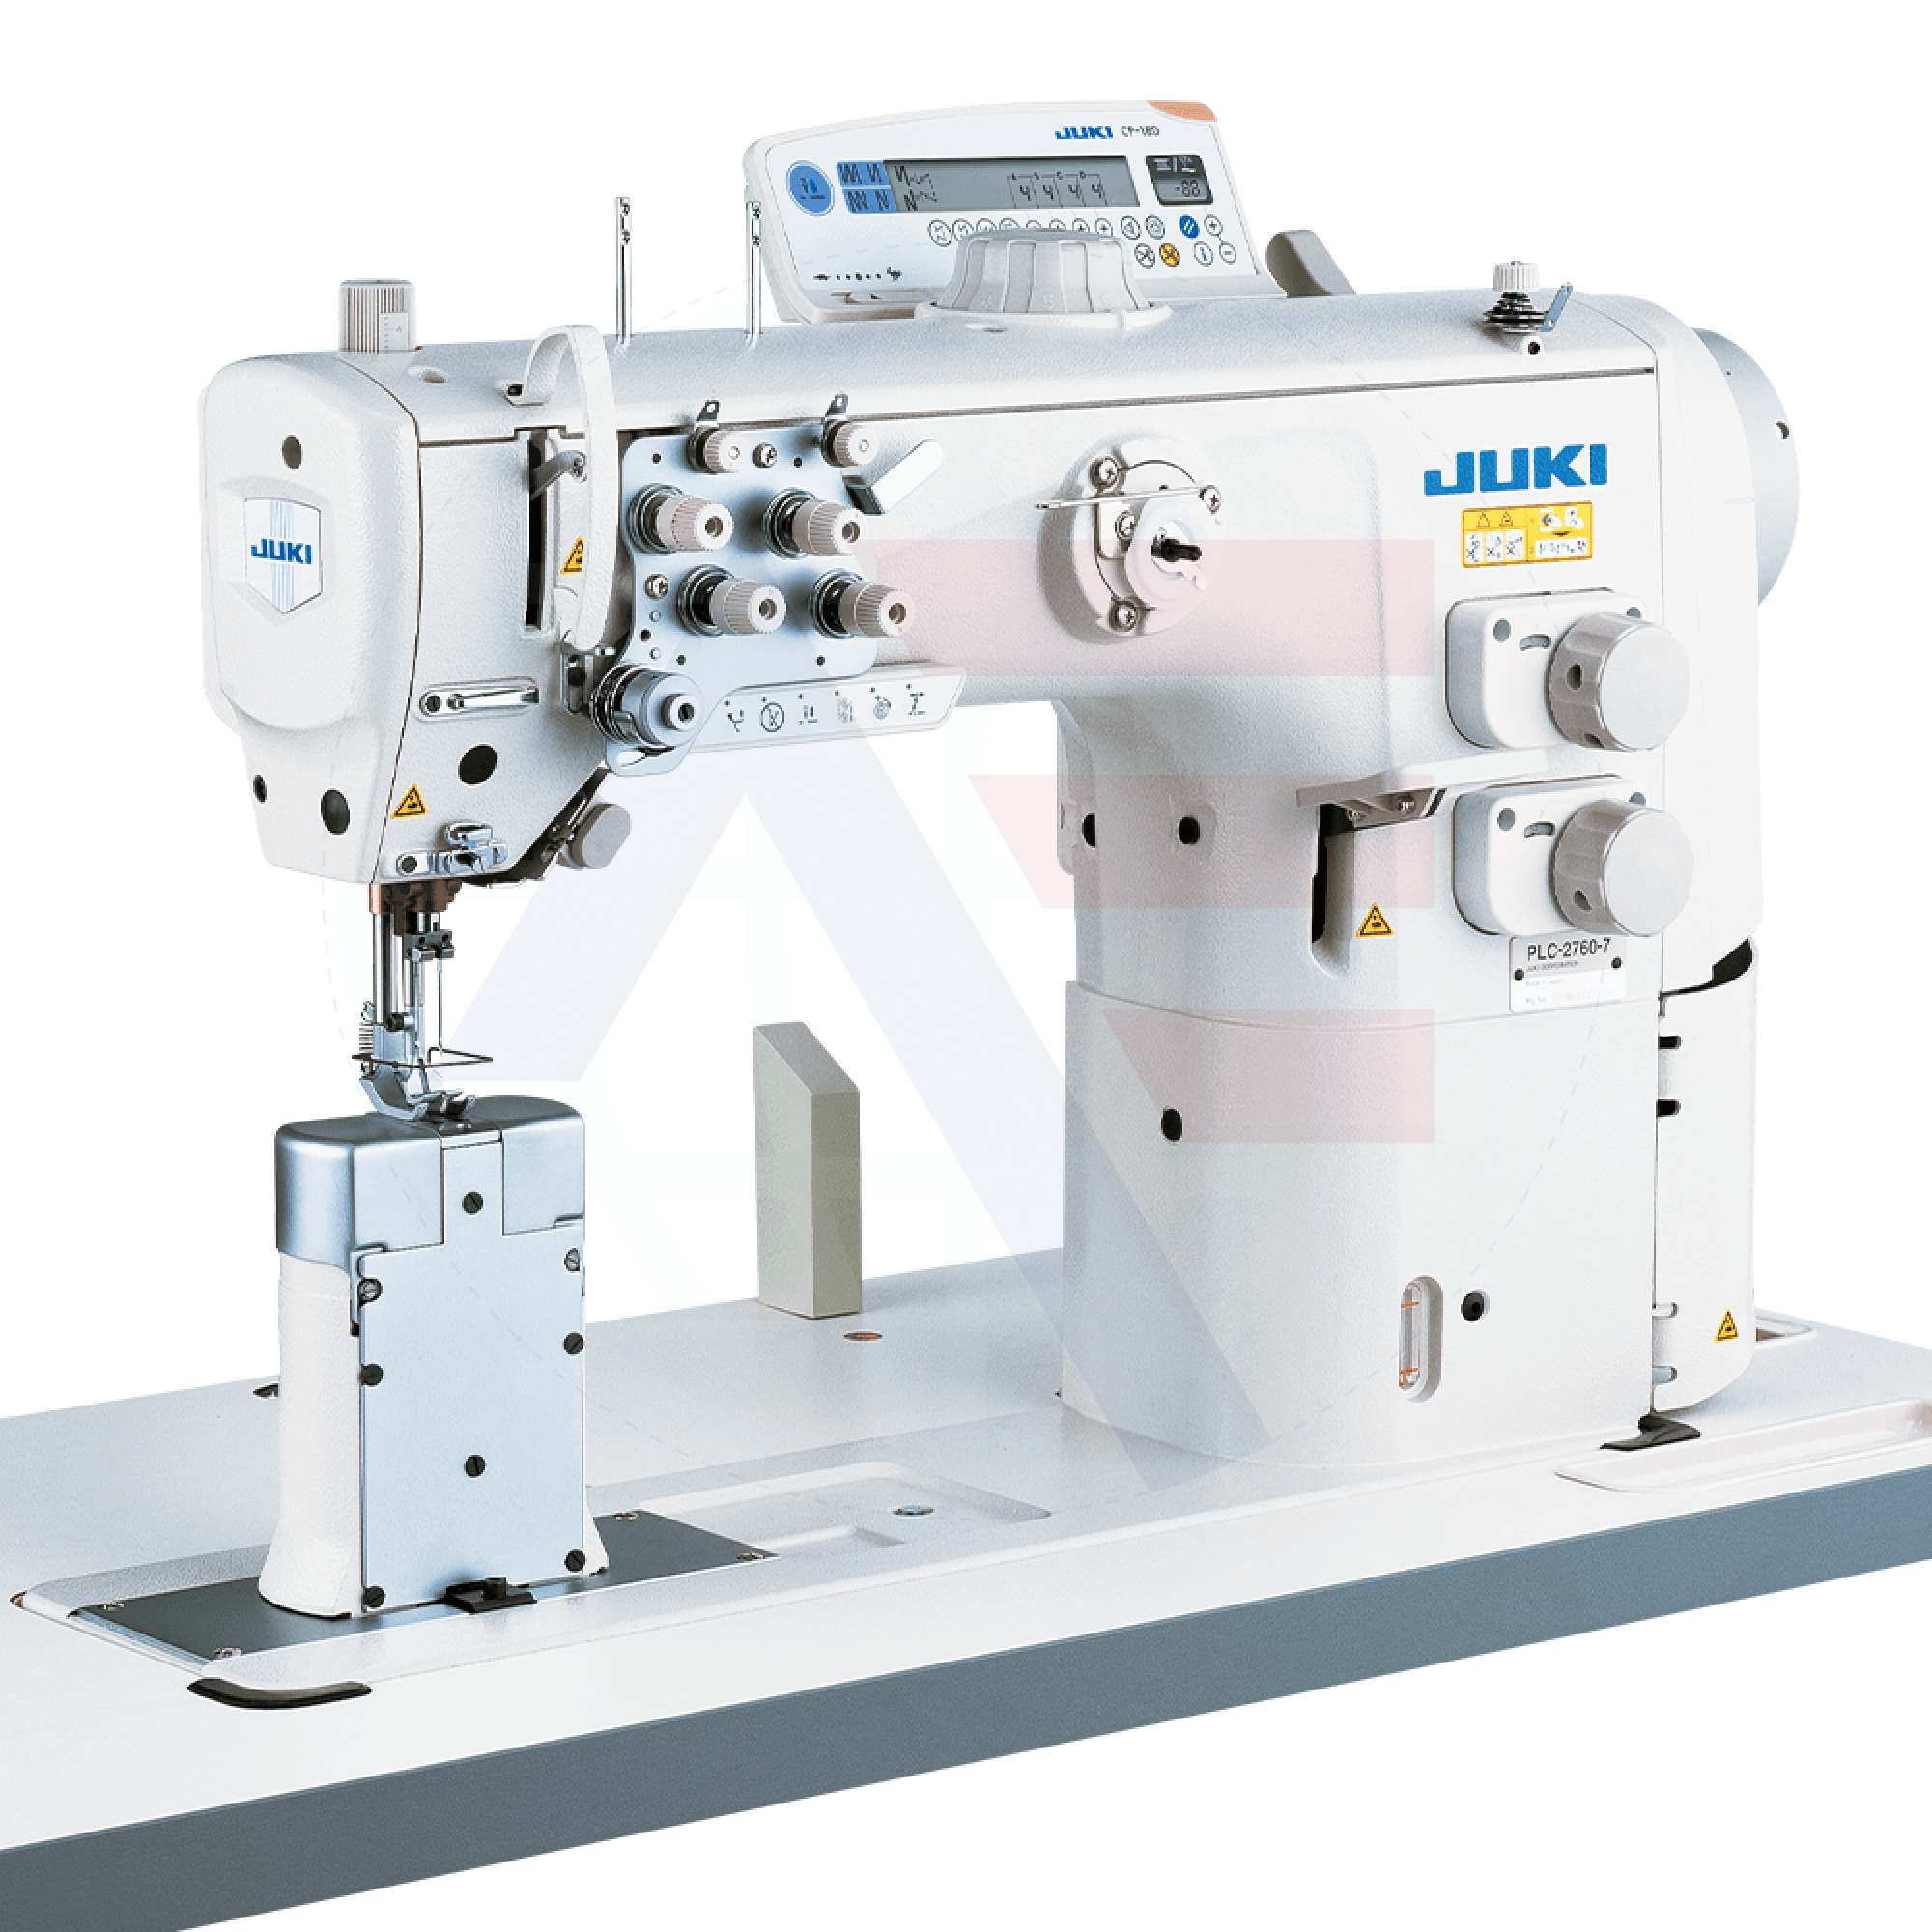 Juki Plc-2760-7 2-Needle Post-Bed Walking-Foot Machine (Auto-Functions) Sewing Machines